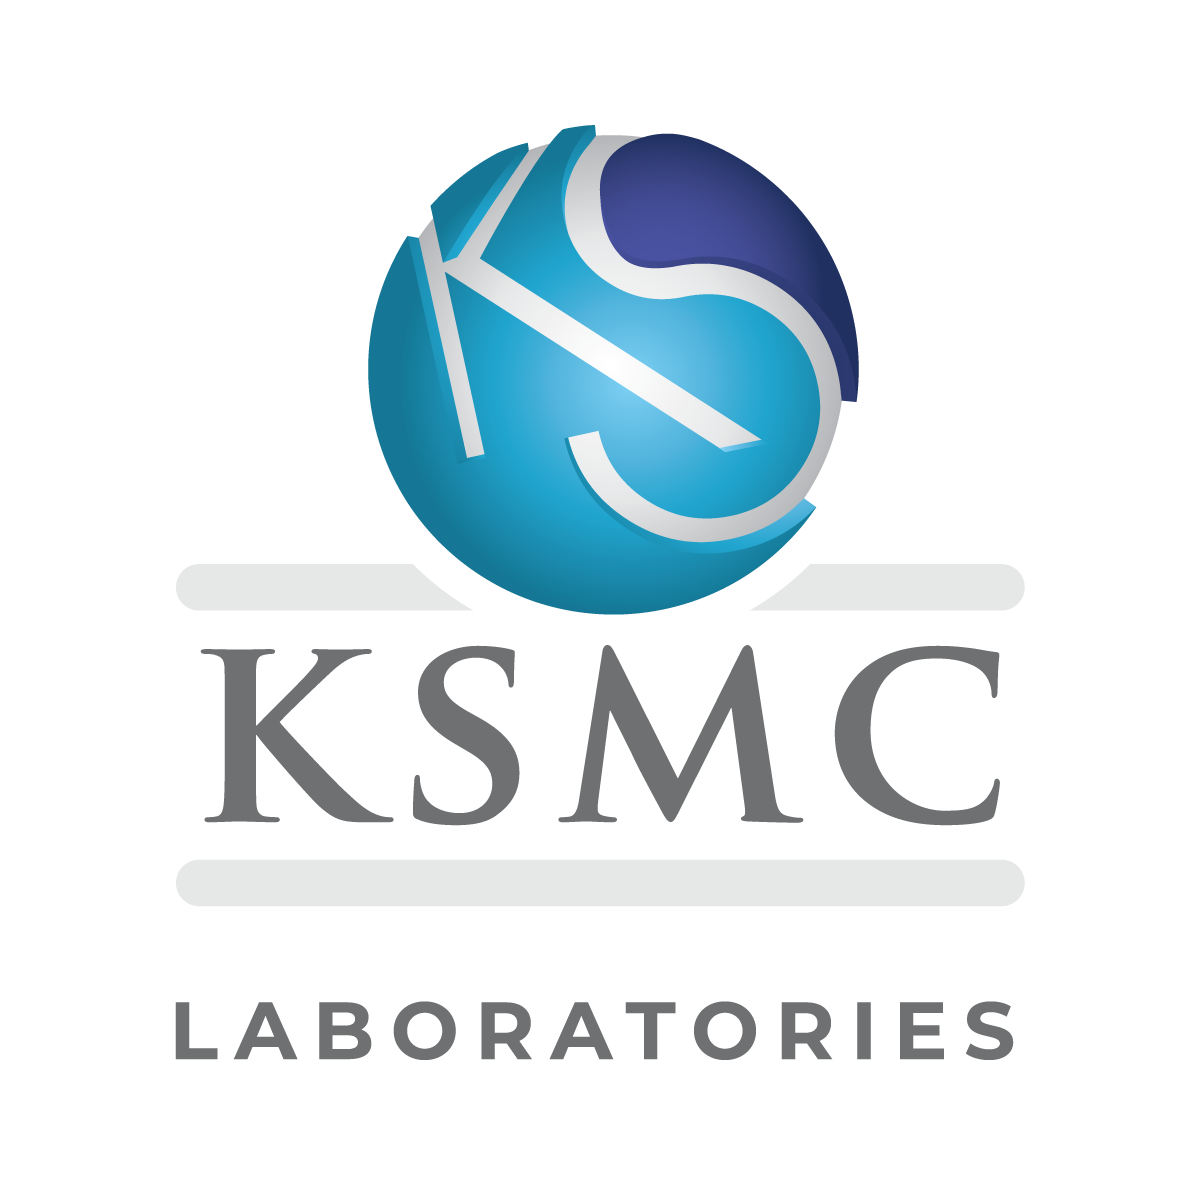 KSMC Laboratories